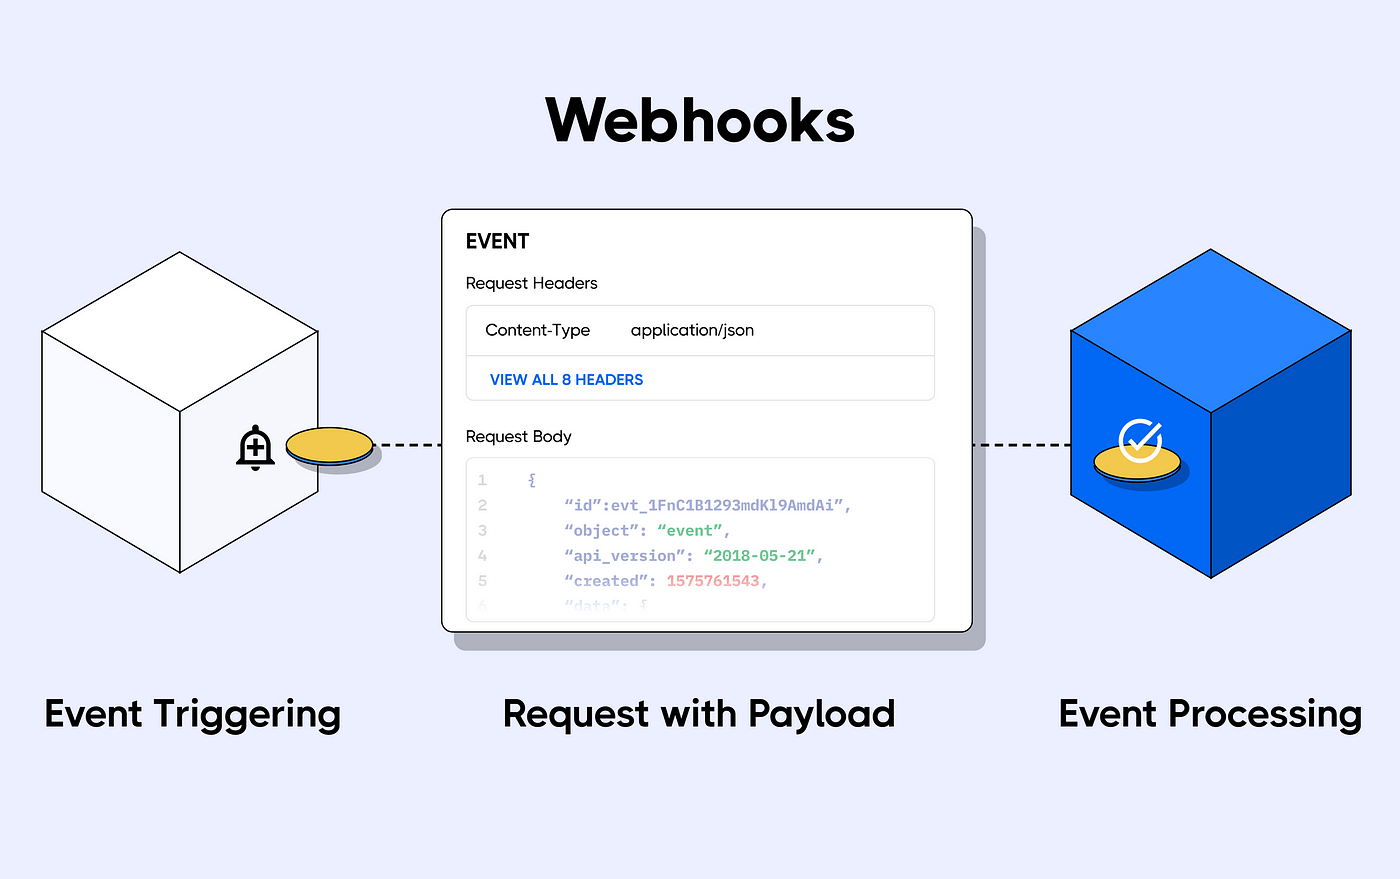 Process of Webhooks